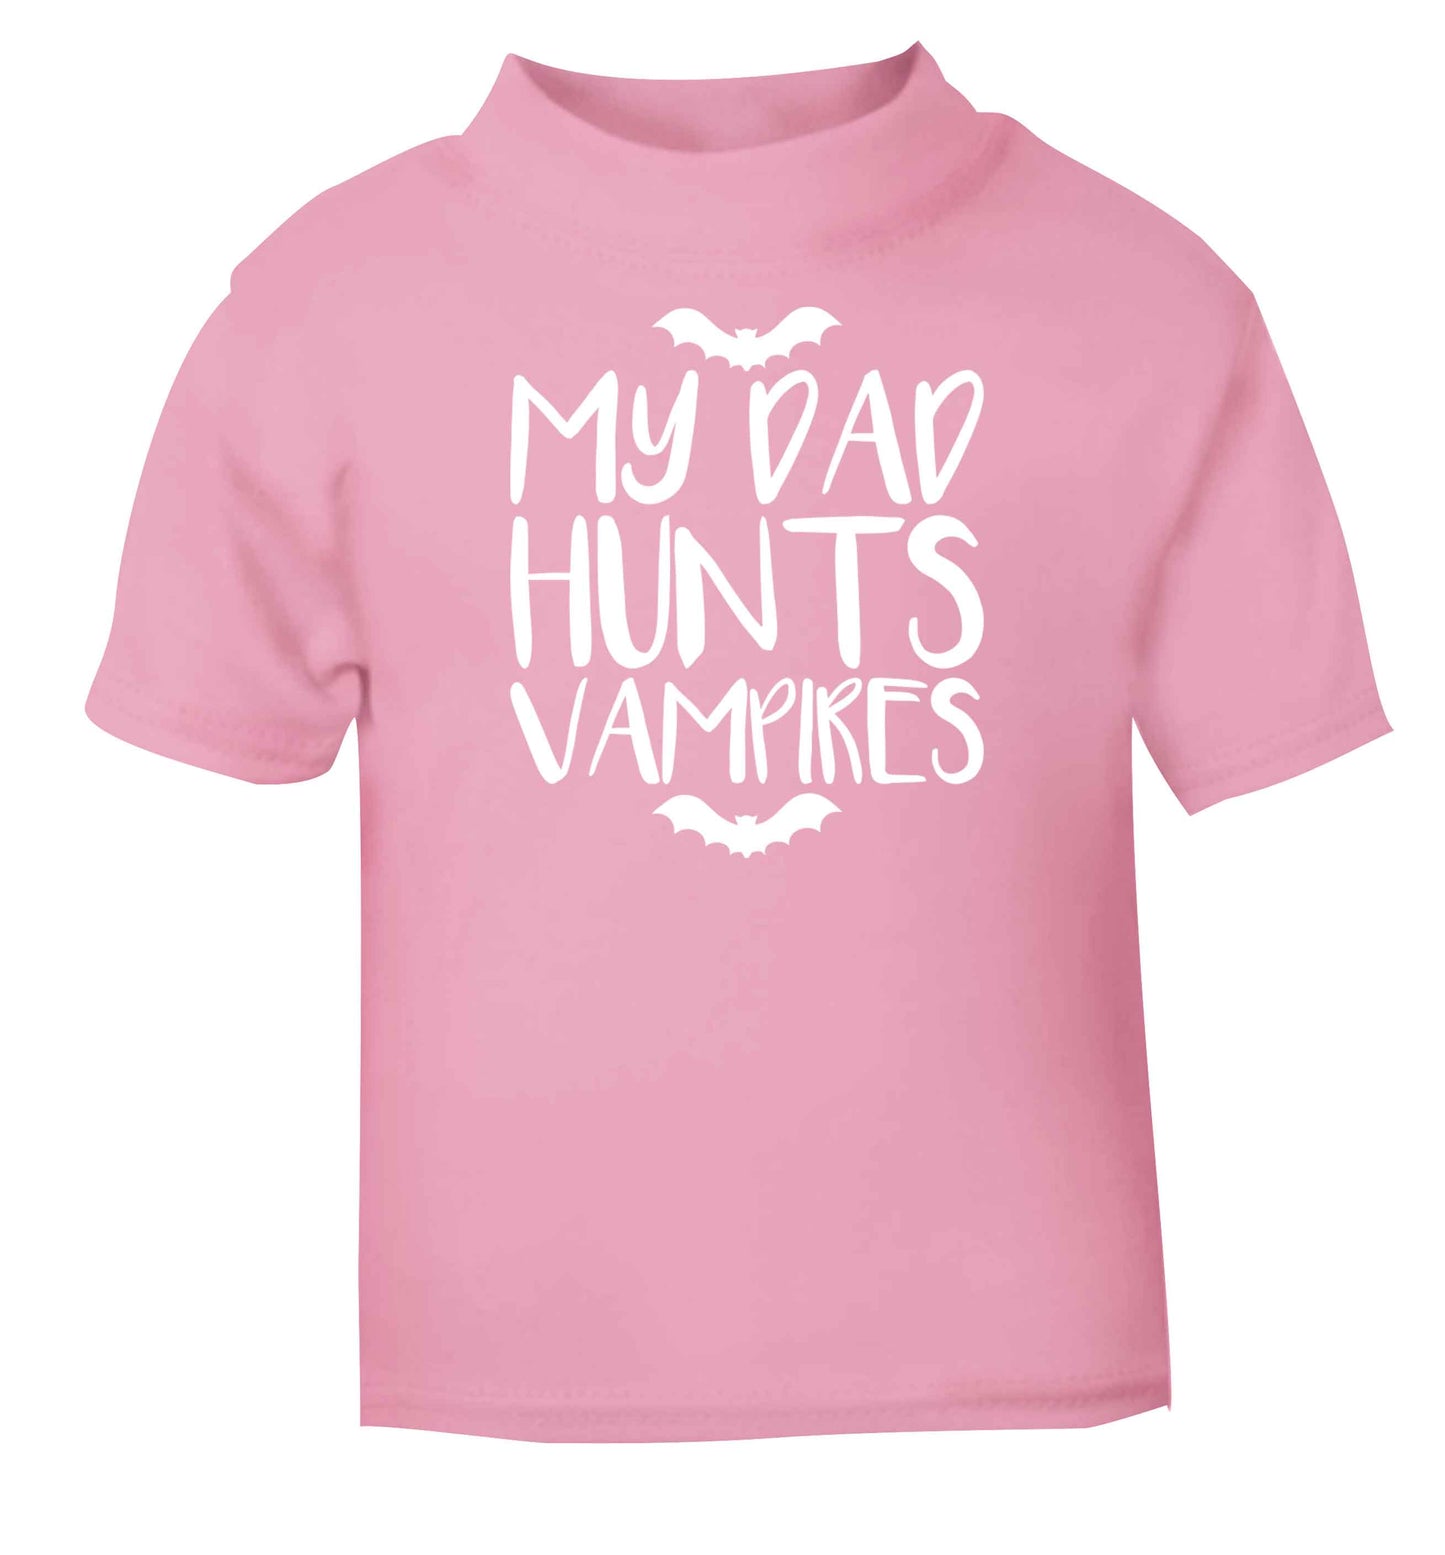 My dad hunts vampires light pink baby toddler Tshirt 2 Years